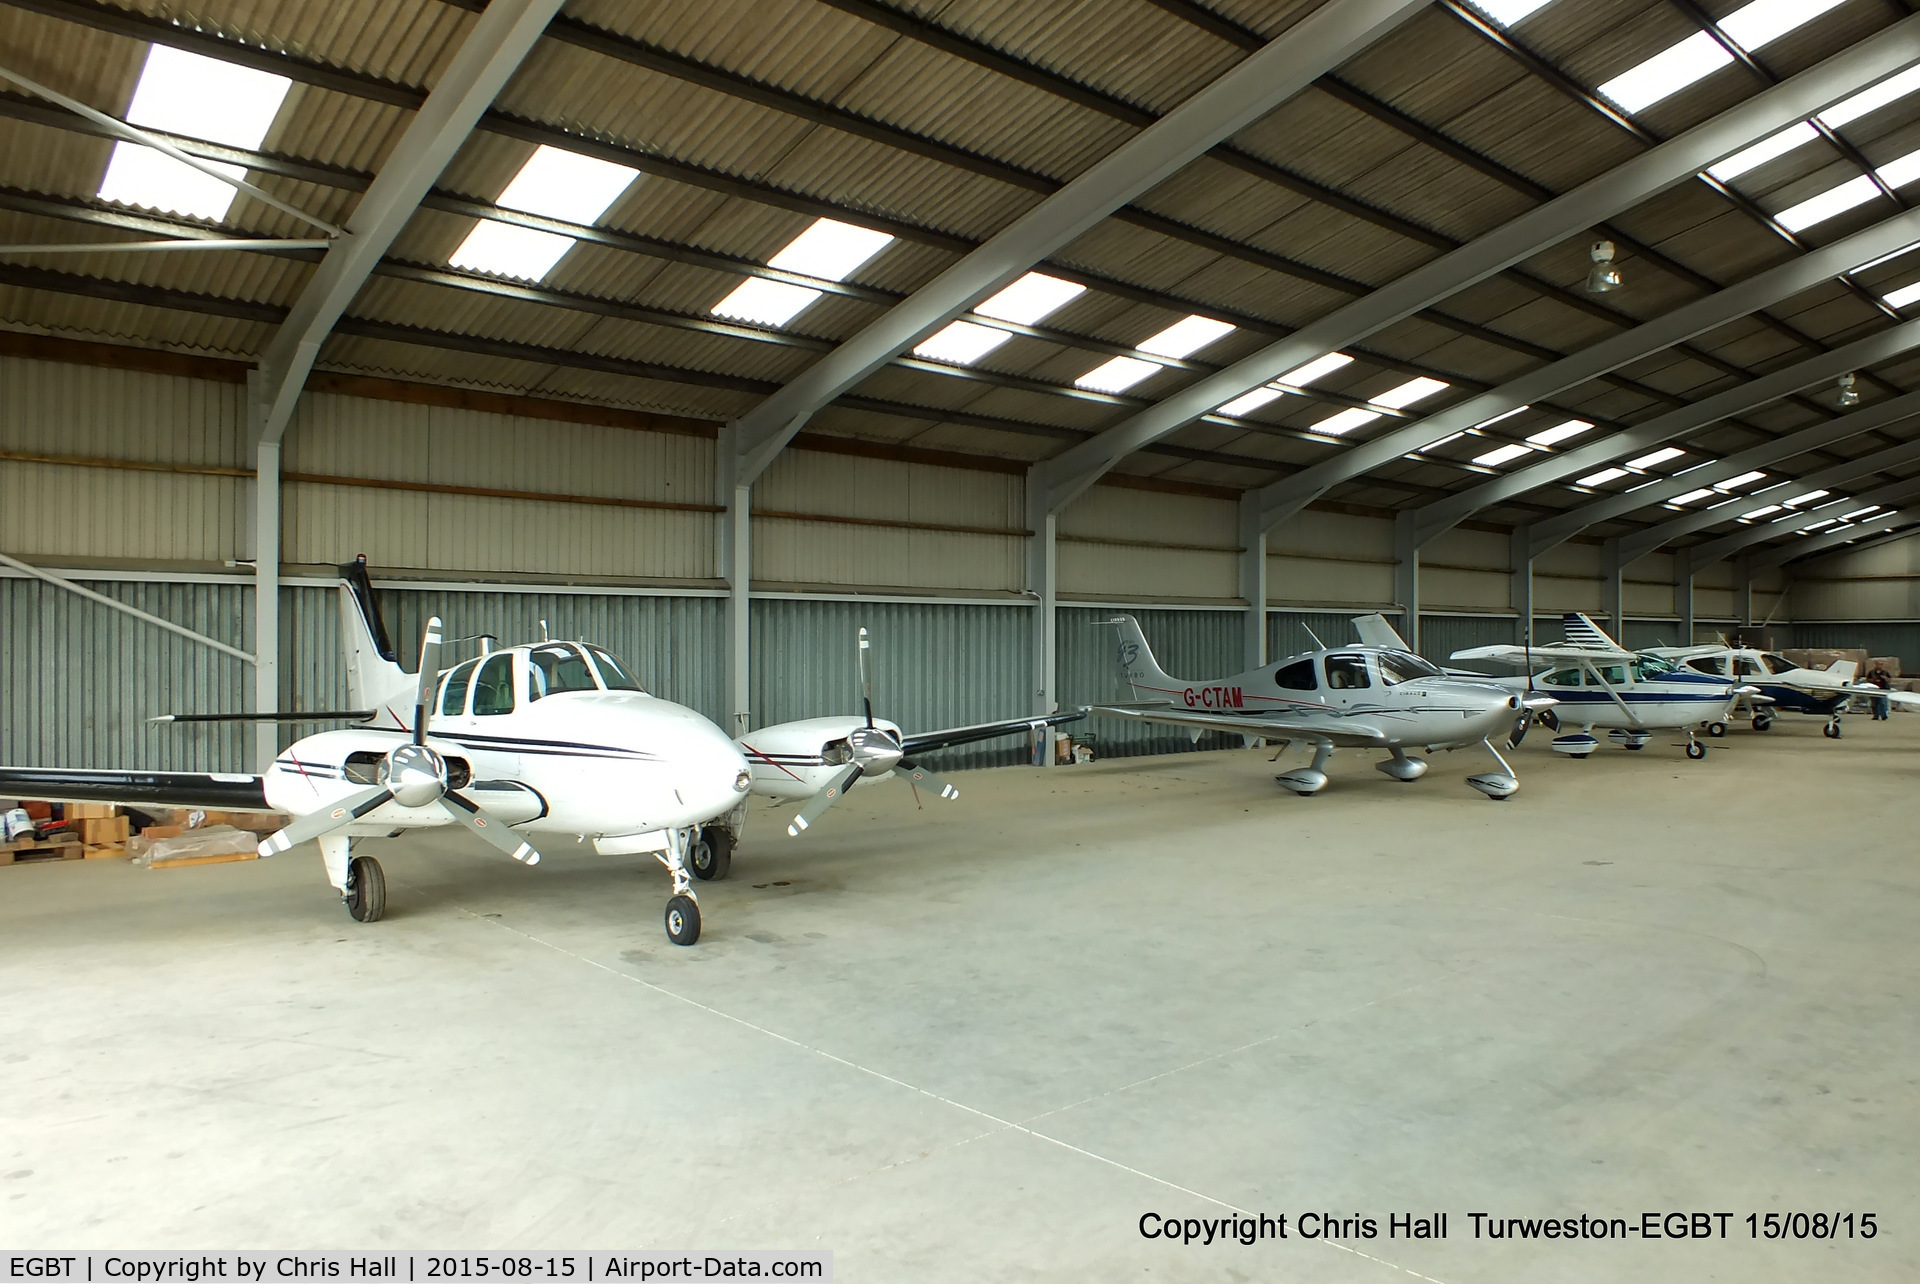 Turweston Aerodrome Airport, Turweston, England United Kingdom (EGBT) - Turweston